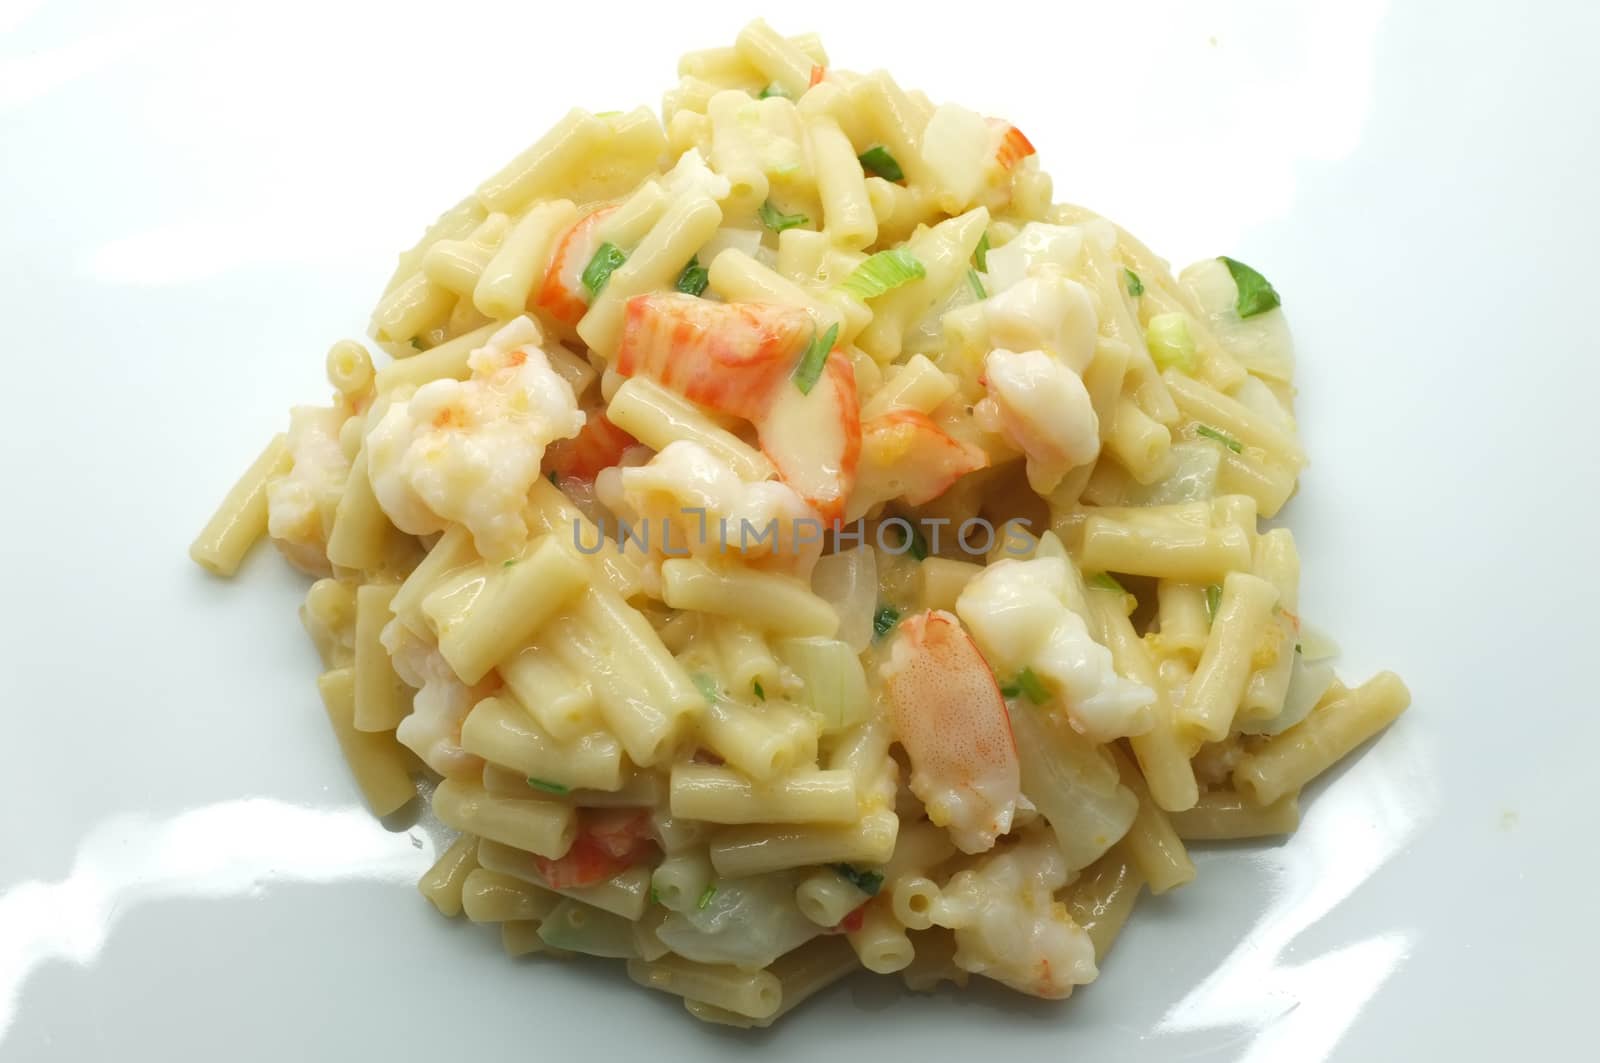 Macaroni, pasta with white cheese, shrimp, crab stick and onion